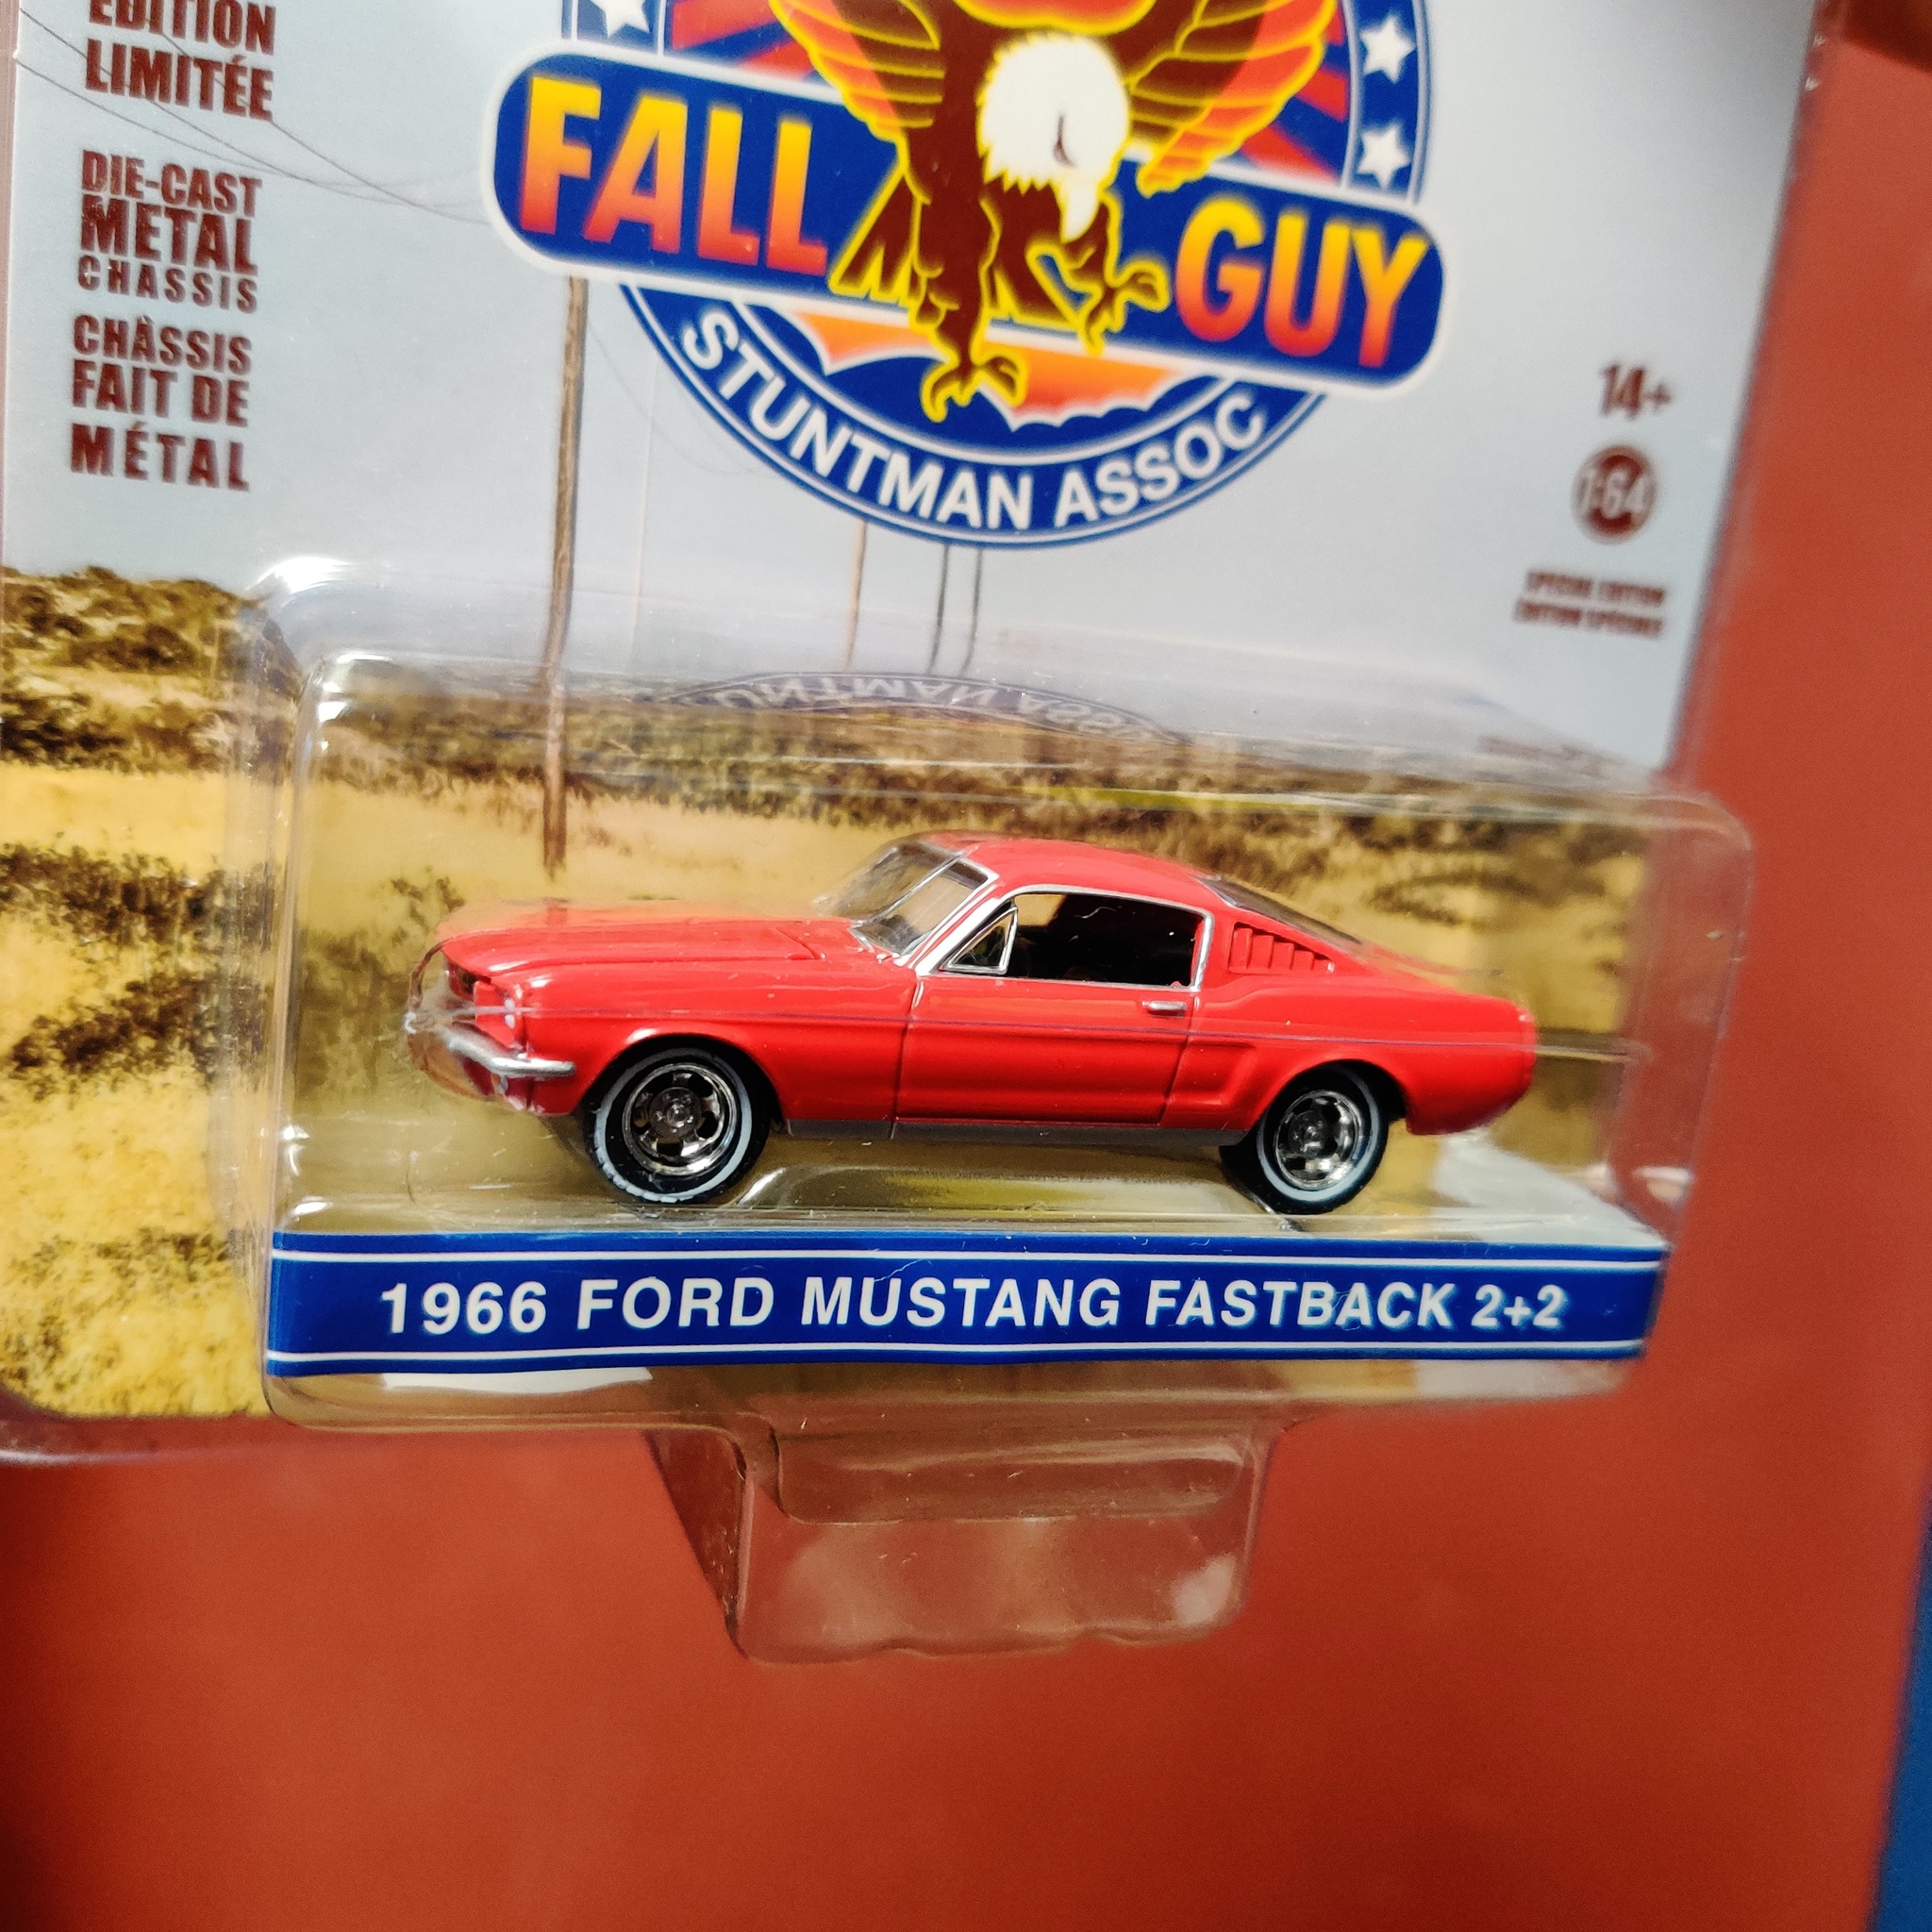 Skala 1/64 Ford Mustang Fastback 2-2' "Fall Guy Stuntman Assoc" fr GreenLight Hollywood